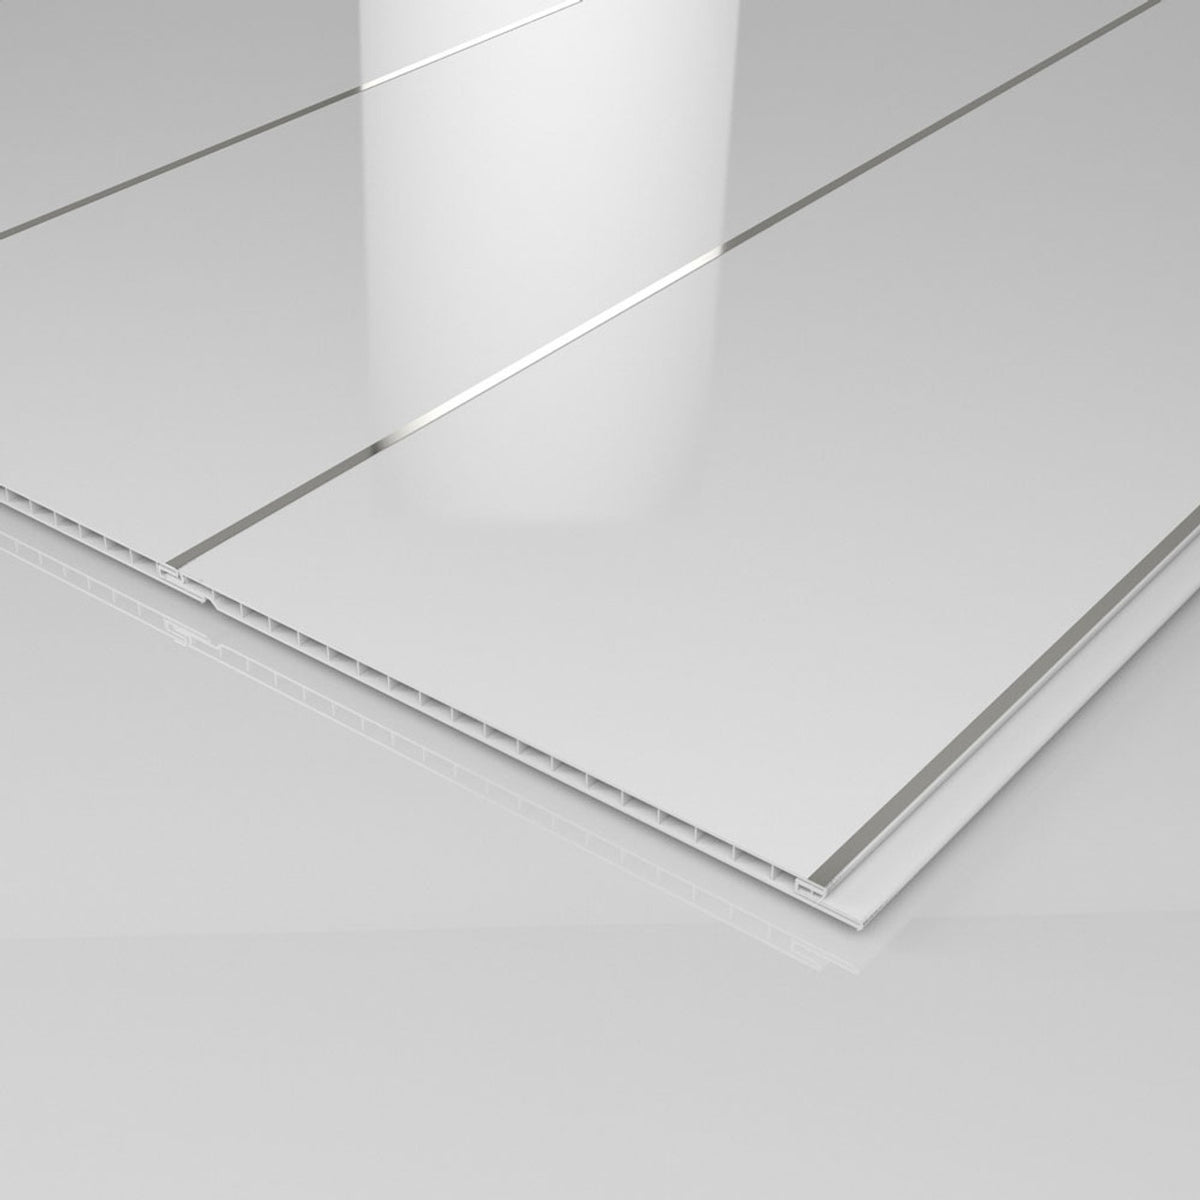 PVC Ceiling Panels - Single Chrome Gloss - 4m